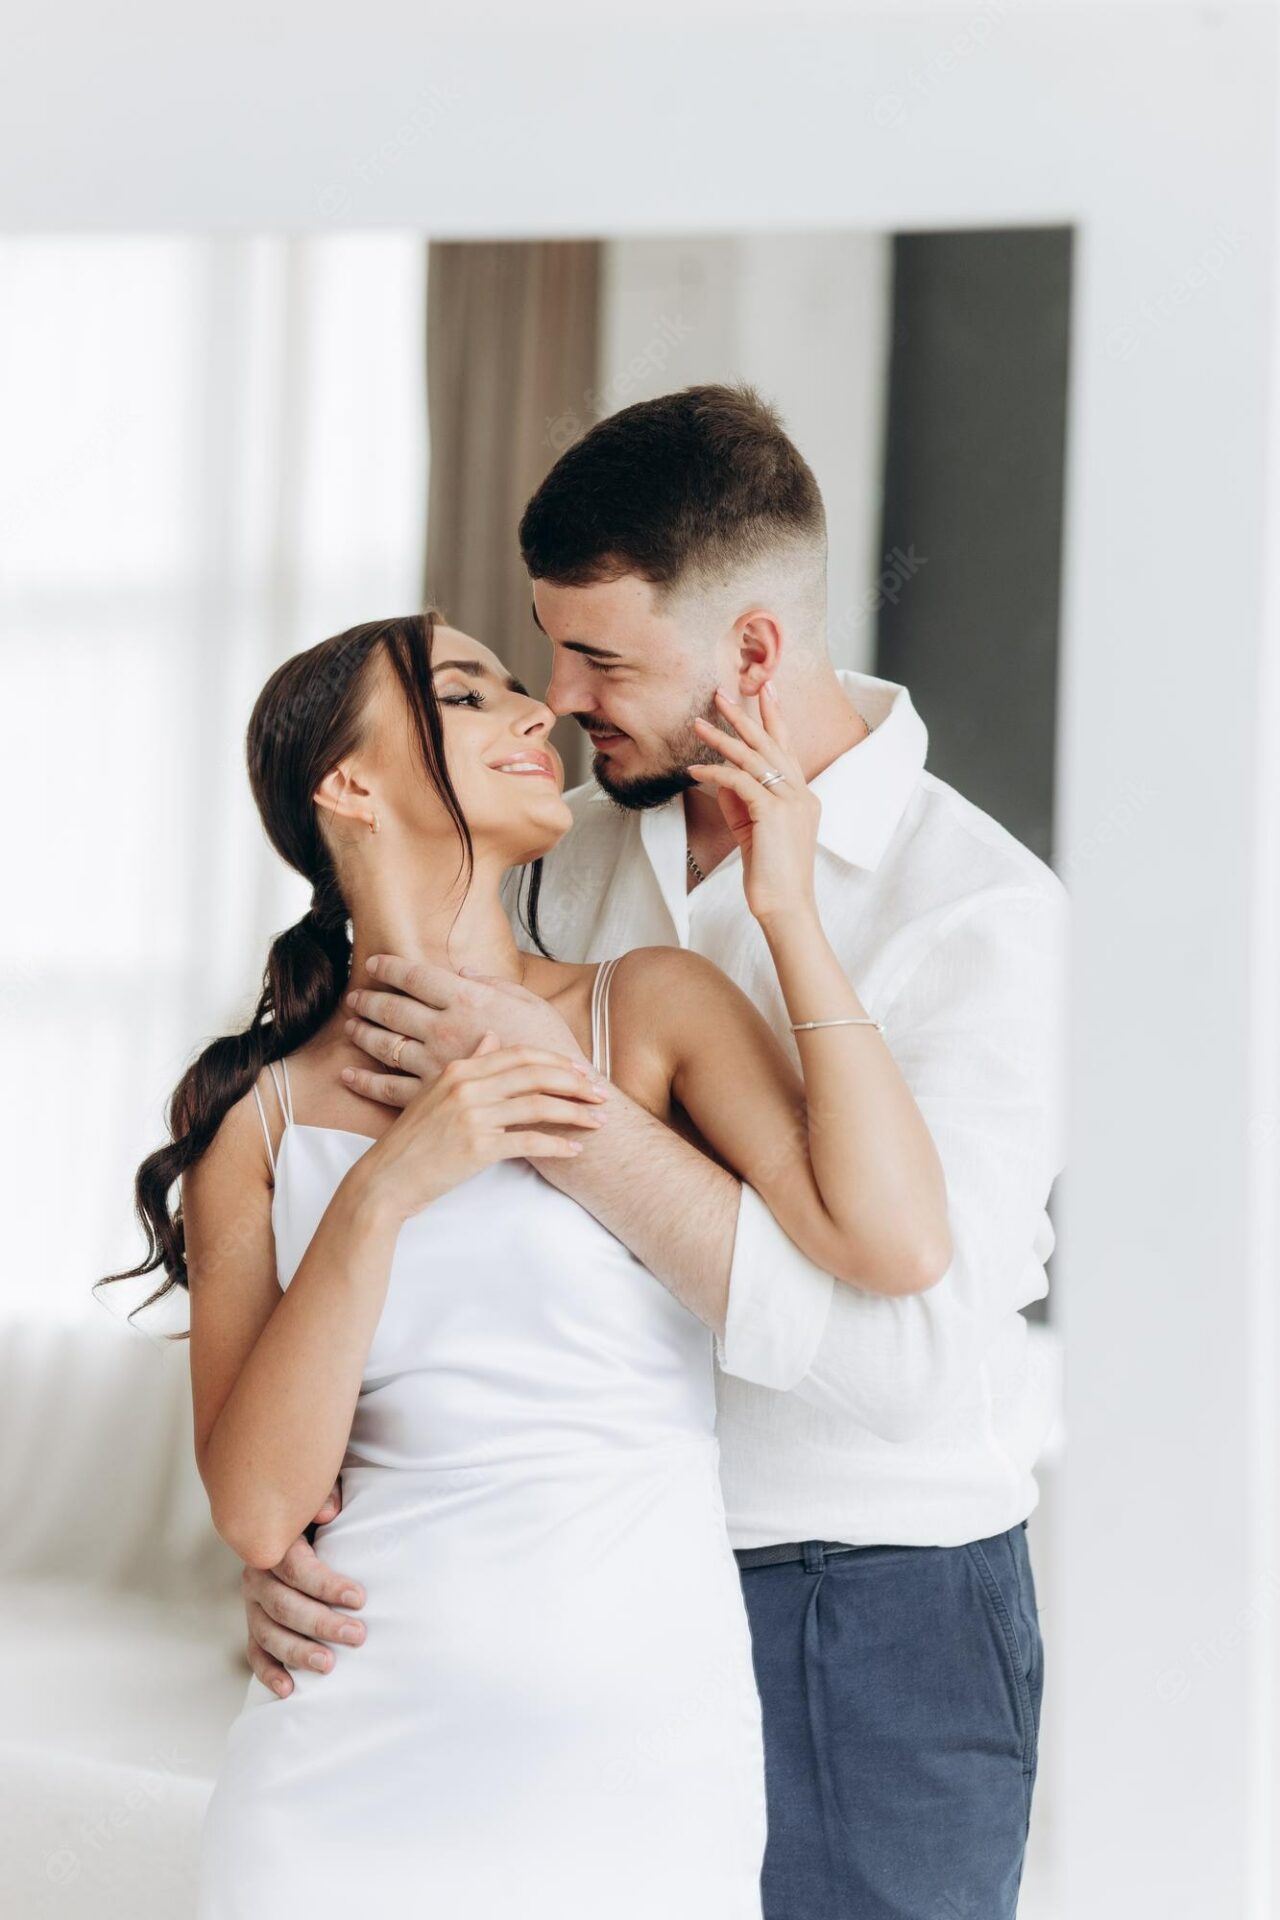 Indoor Pre-Wedding Photoshoot Ideas - Mirror love